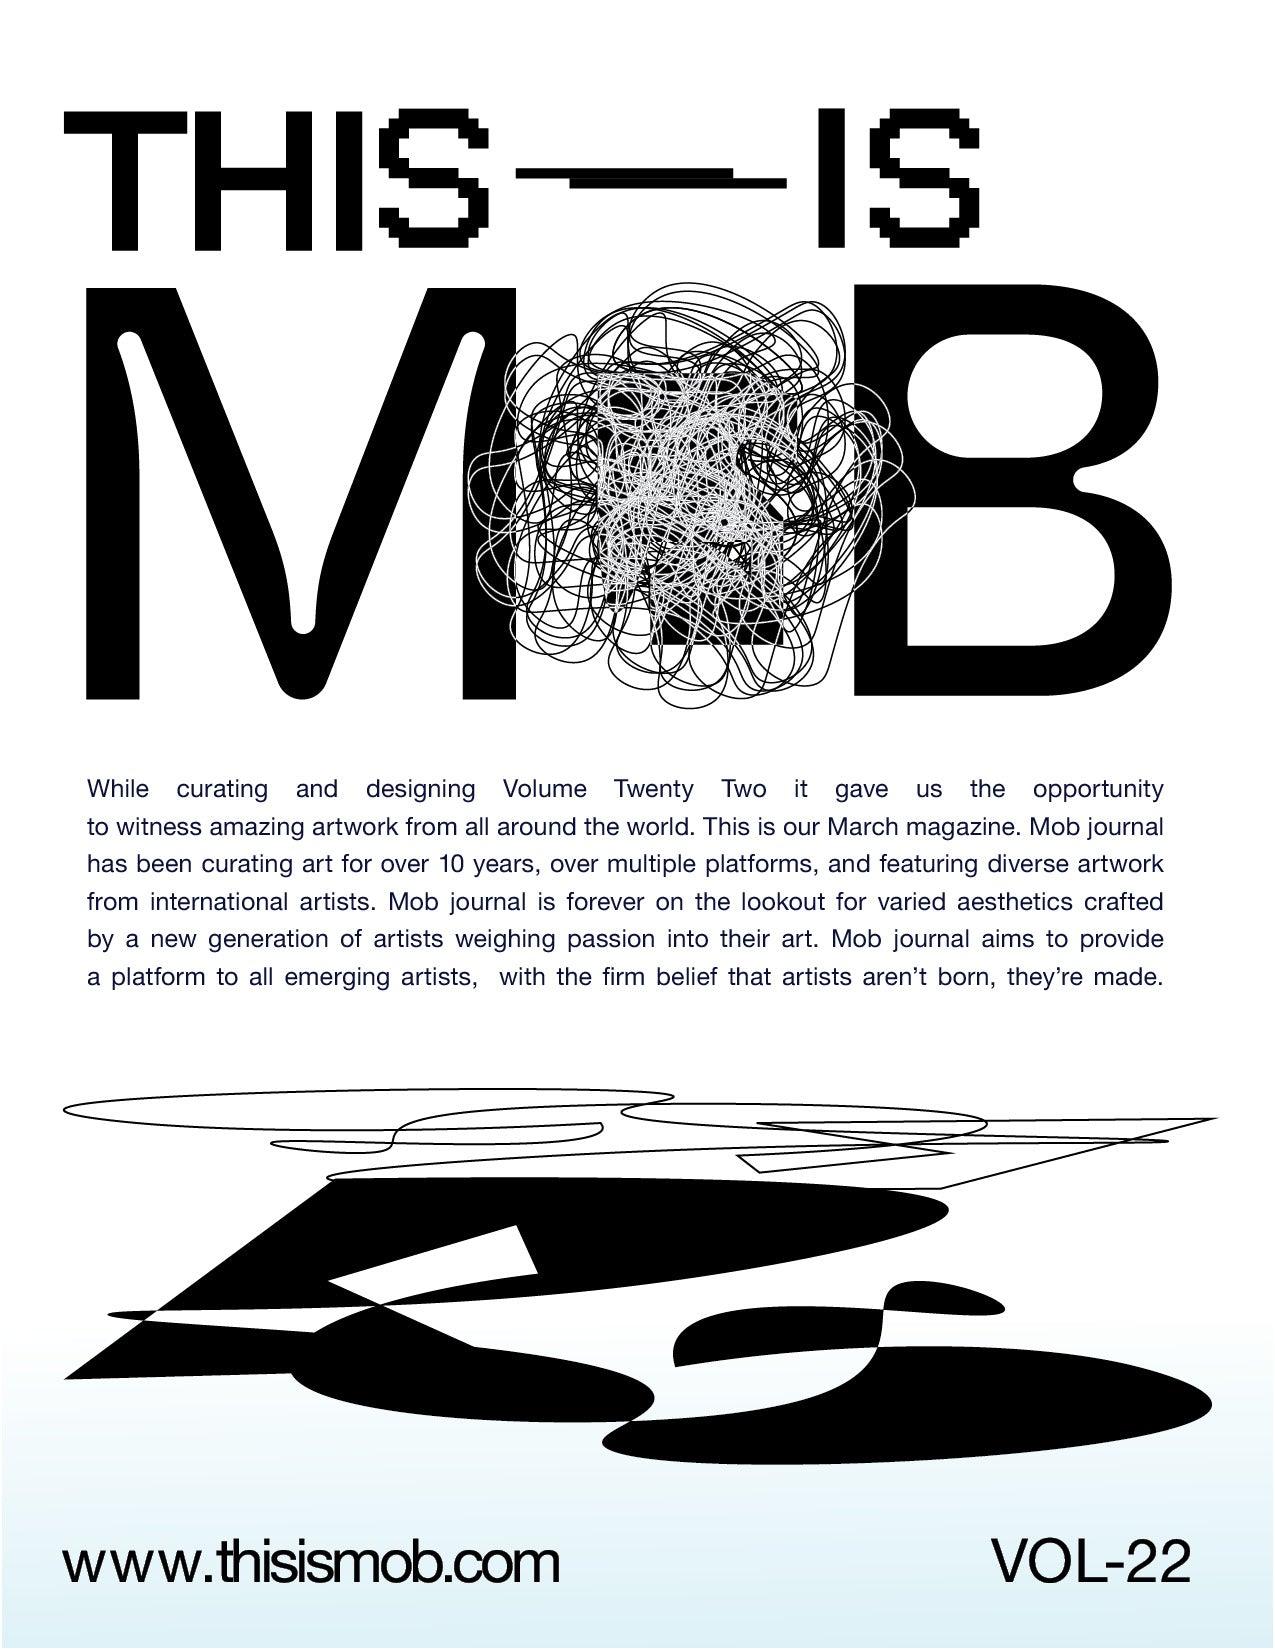 MOB JOURNAL | VOLUME TWENTY TWO | ISSUE #06 - Mob Journal